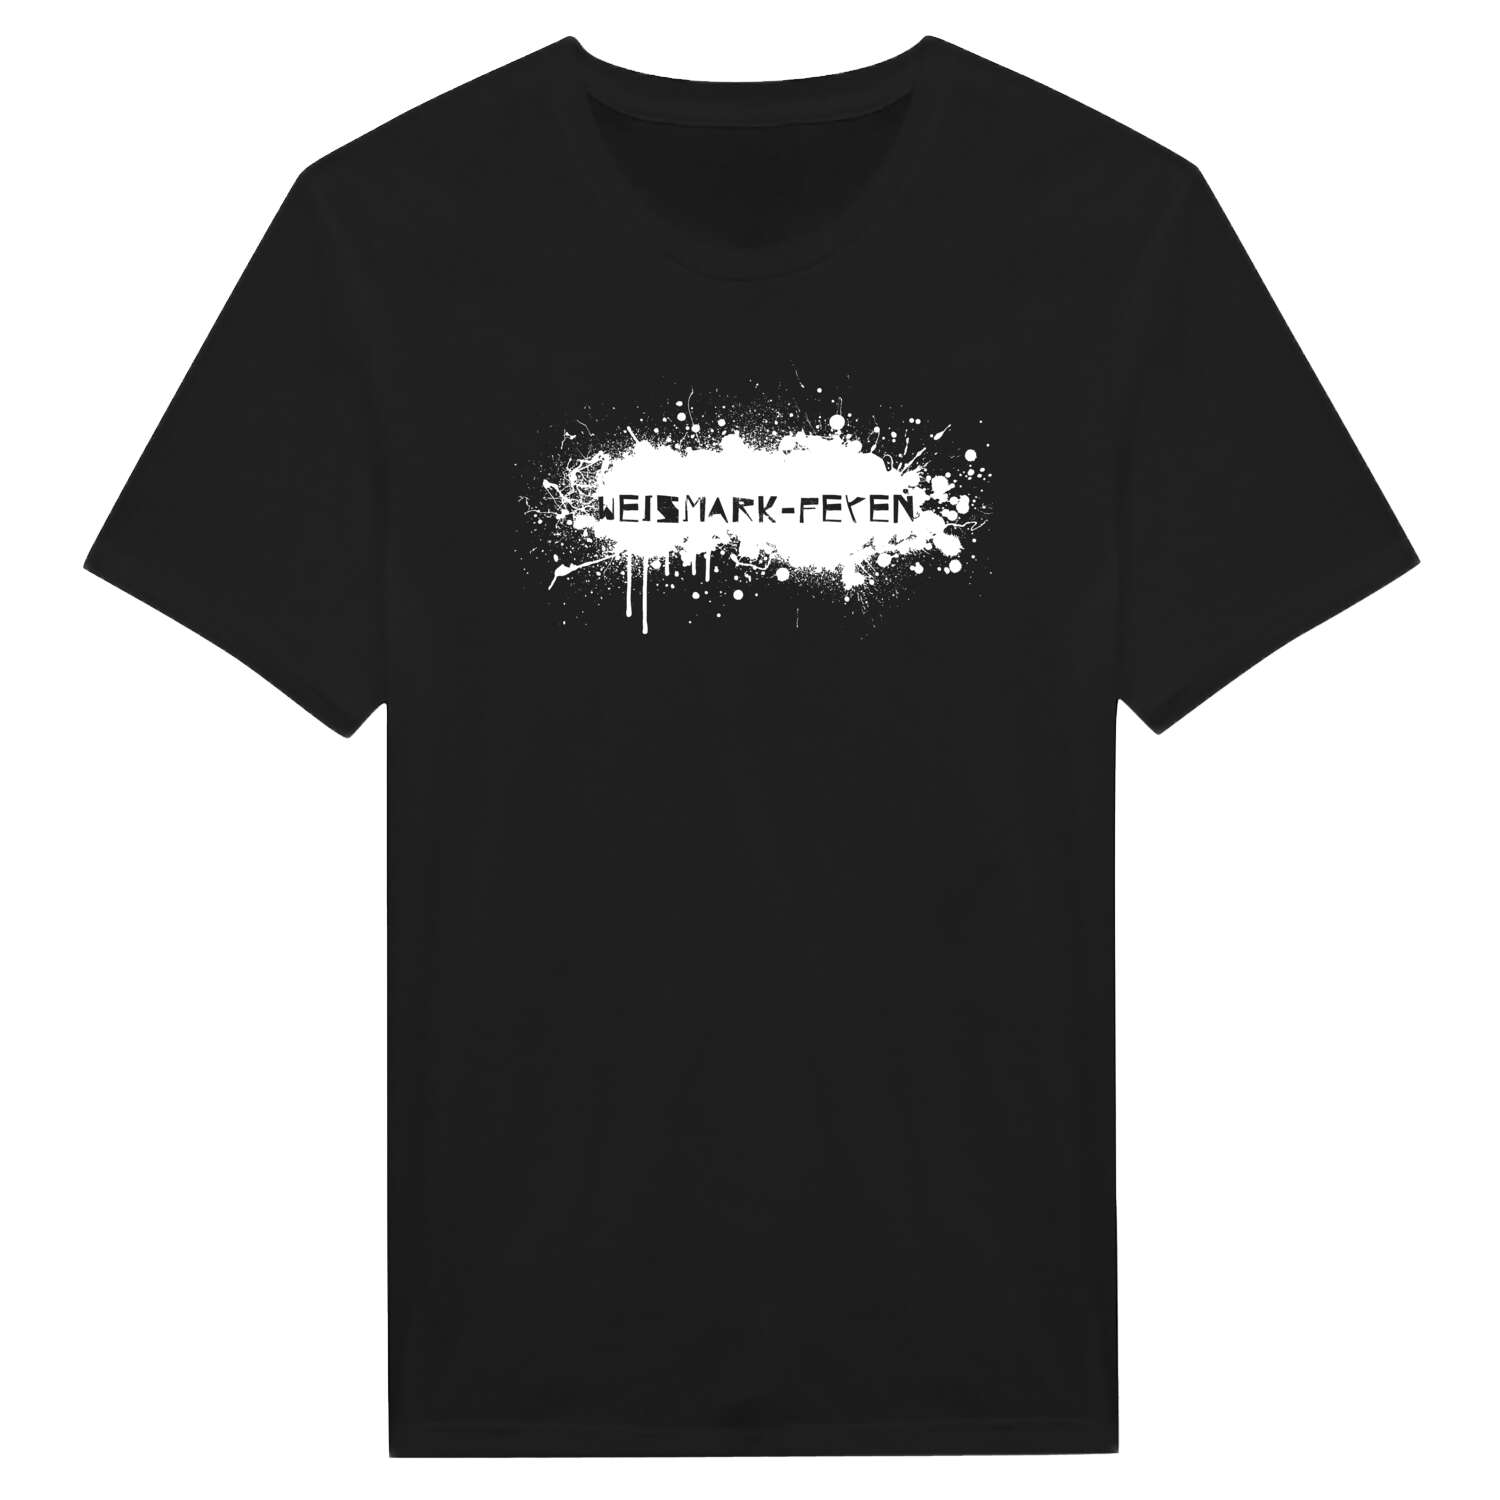 Weismark-Feyen T-Shirt »Paint Splash Punk«